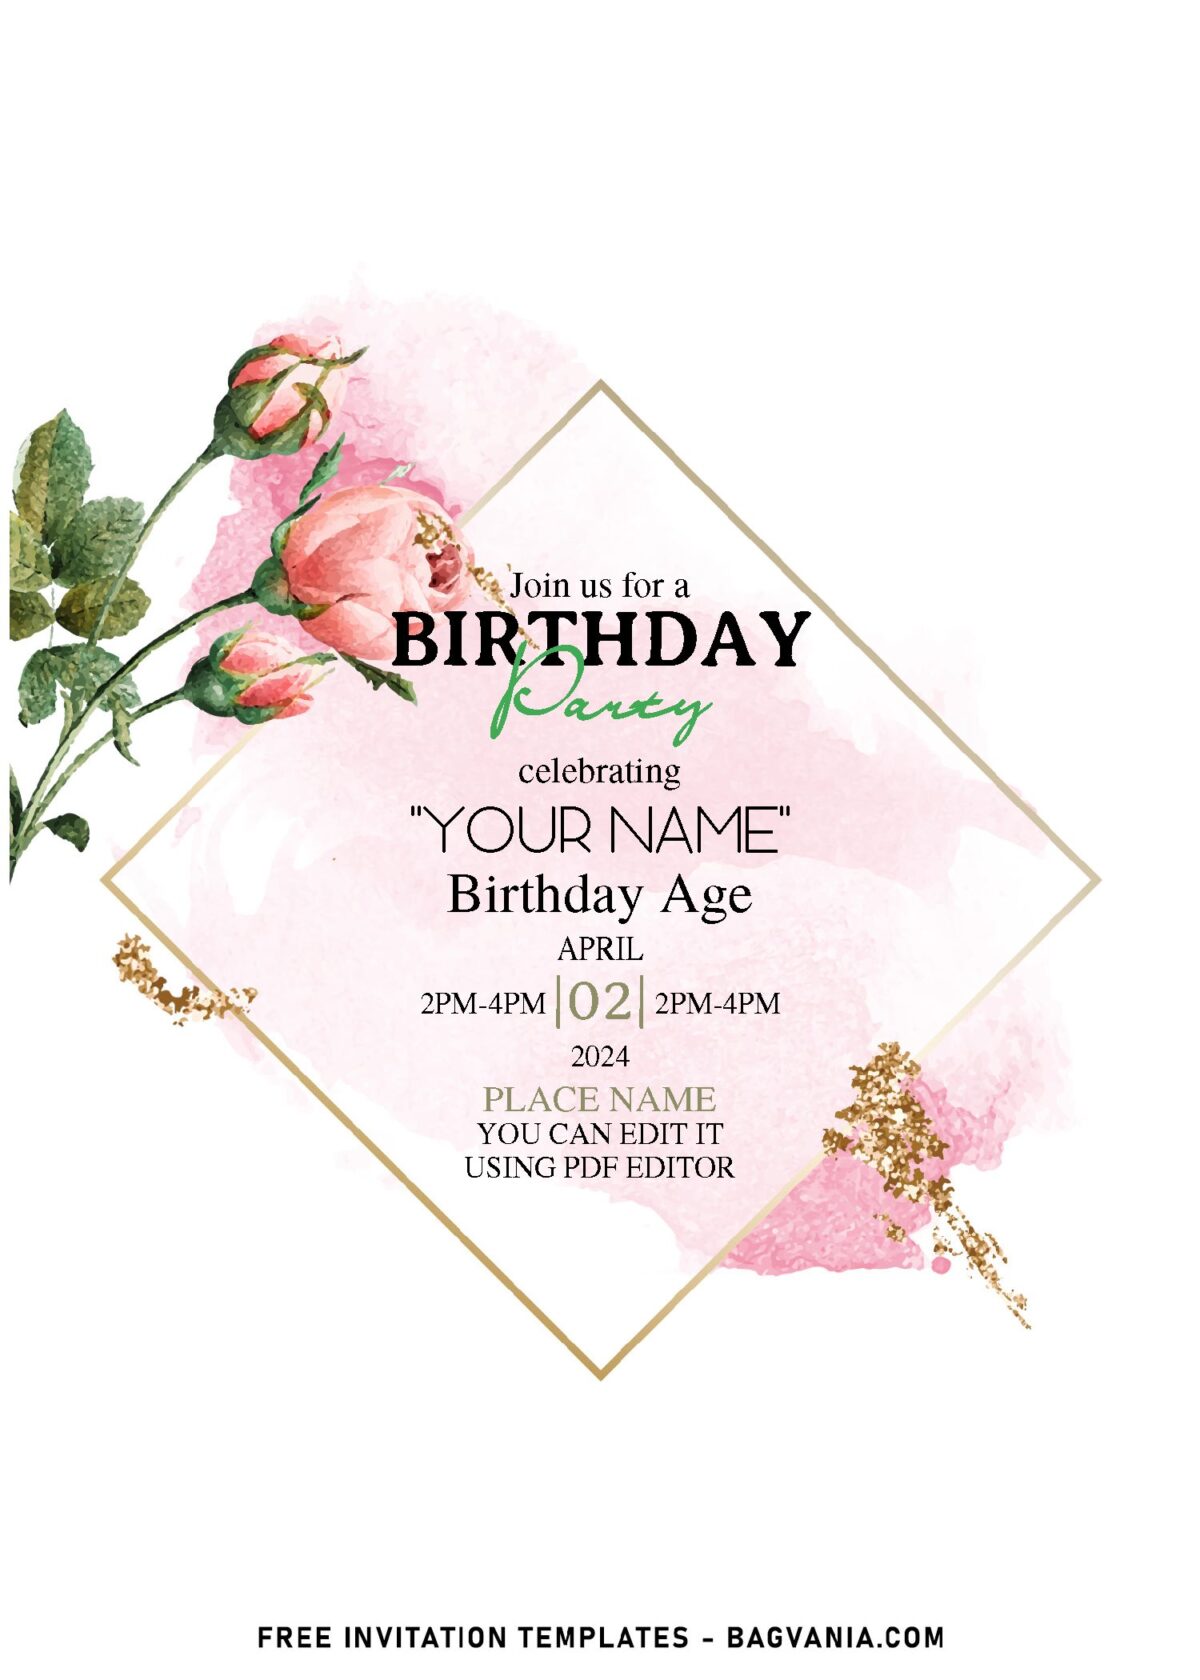 (Free Editable PDF) Splendid Blush Rose Garden Birthday Party Invitation Templates with elegant script